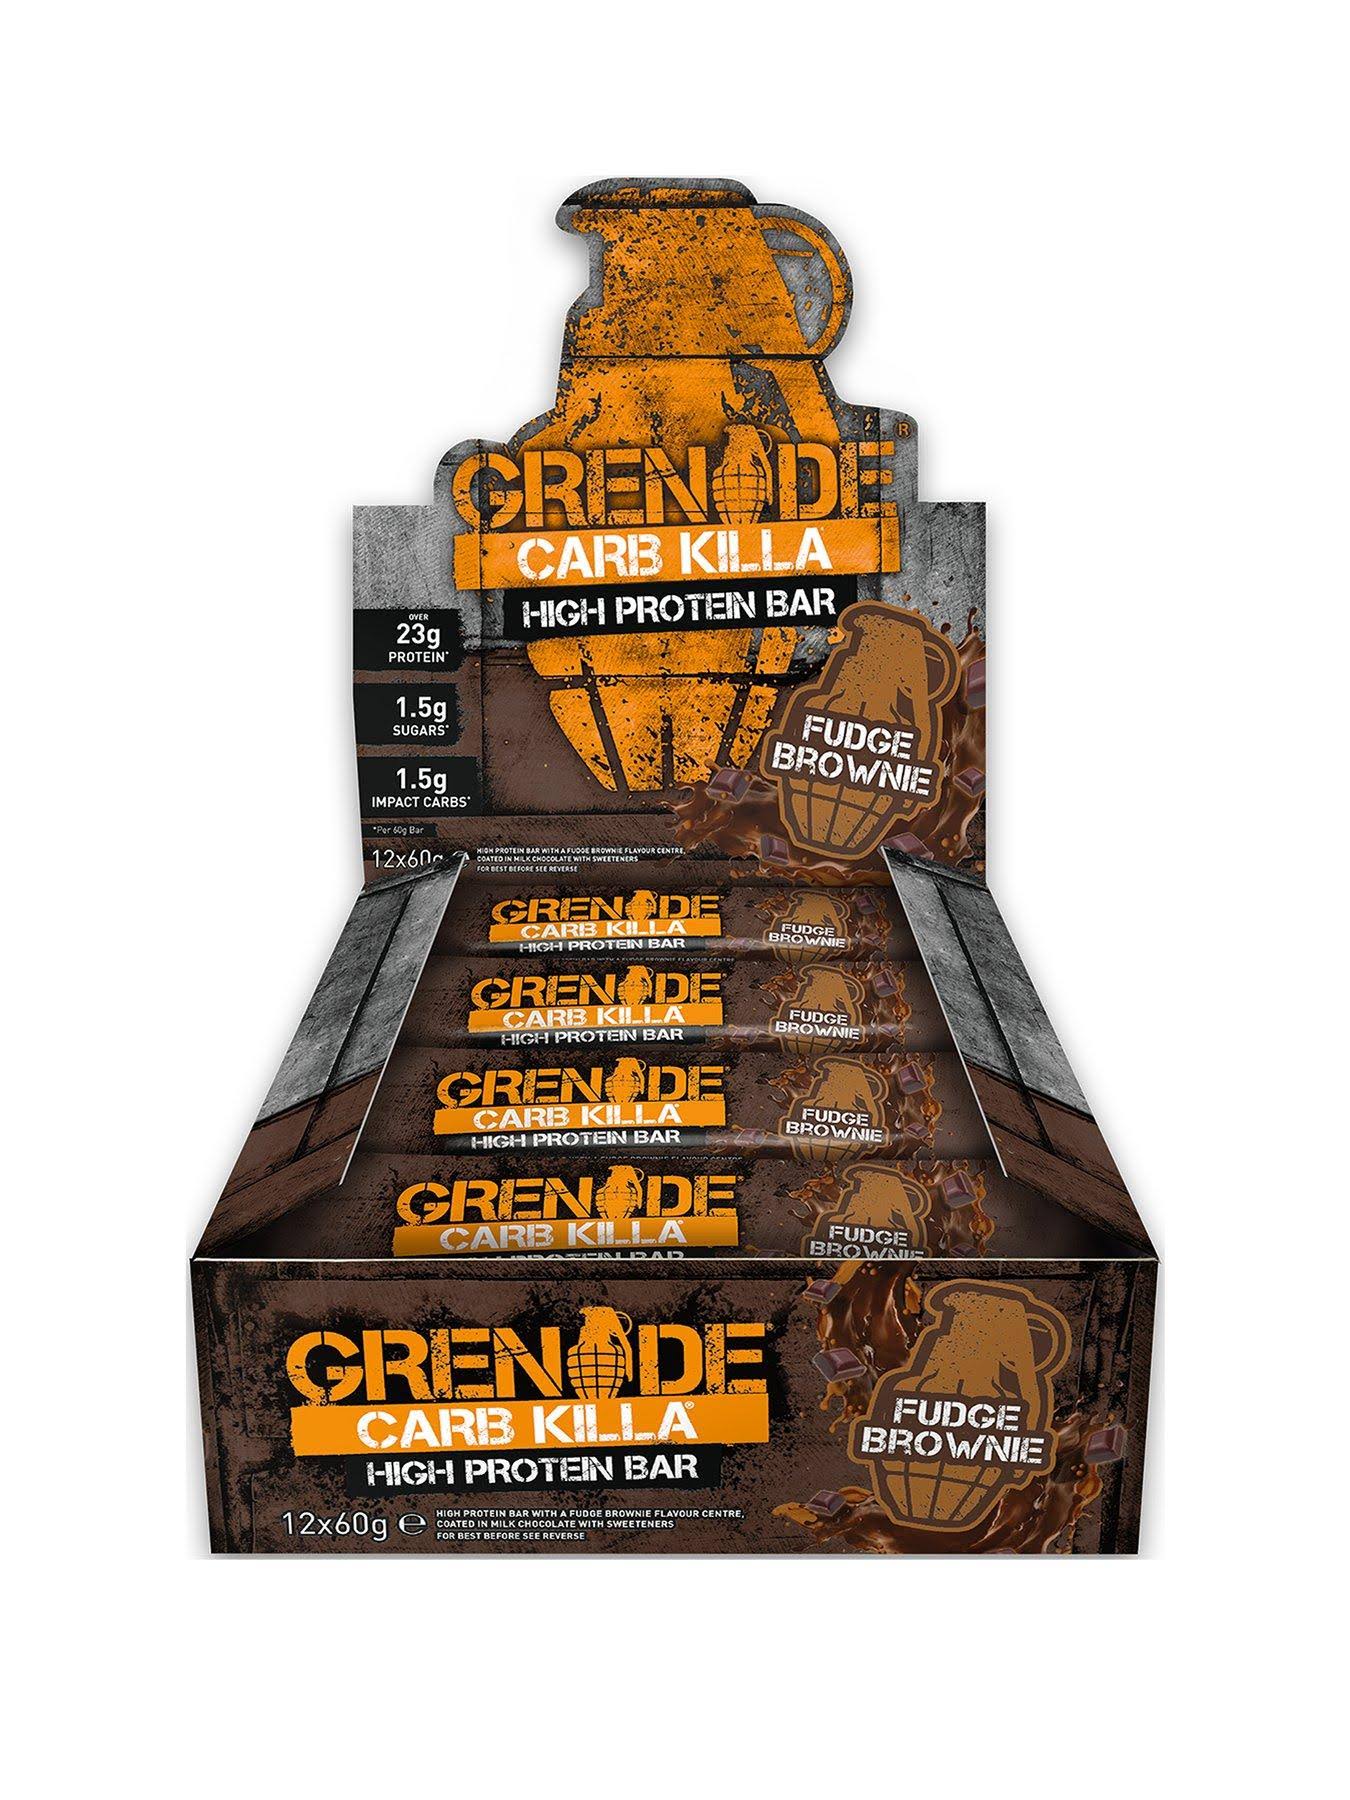 Grenade - Carb Killa, Fudge Brownie - 12 Bars